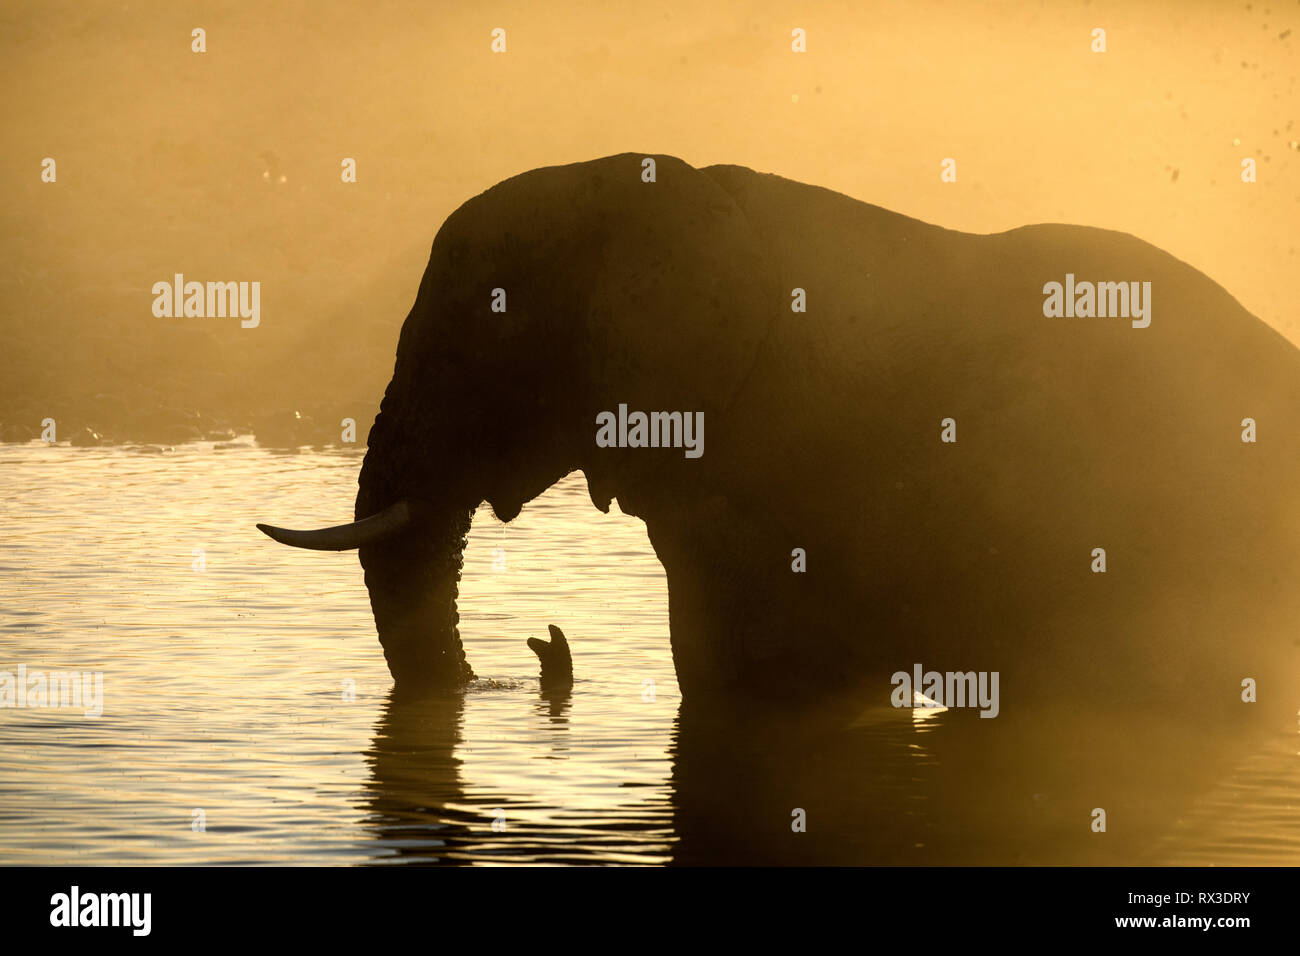 Elefant Silhouette in gelben Staub. Stockfoto